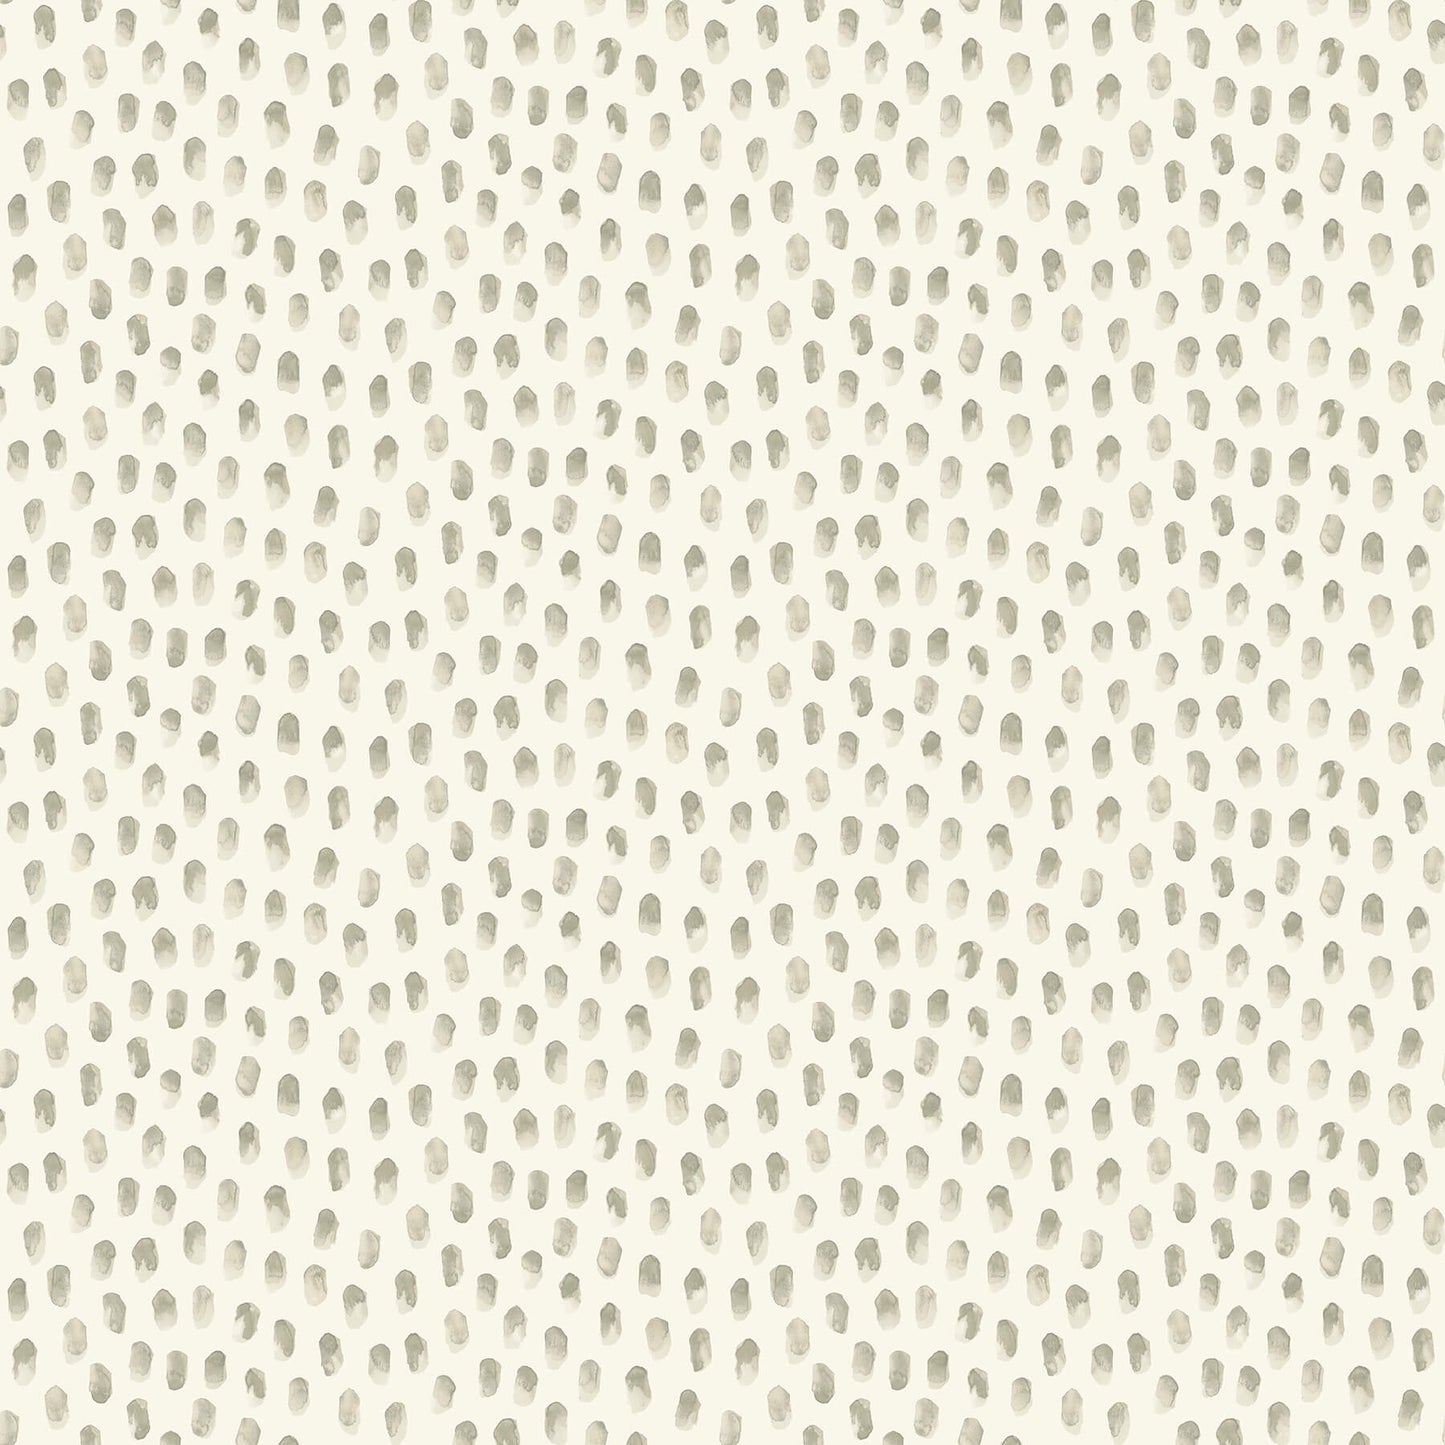 Chesapeake Blue Heron Sand Drips Painted Dots Wallpaper - Grey